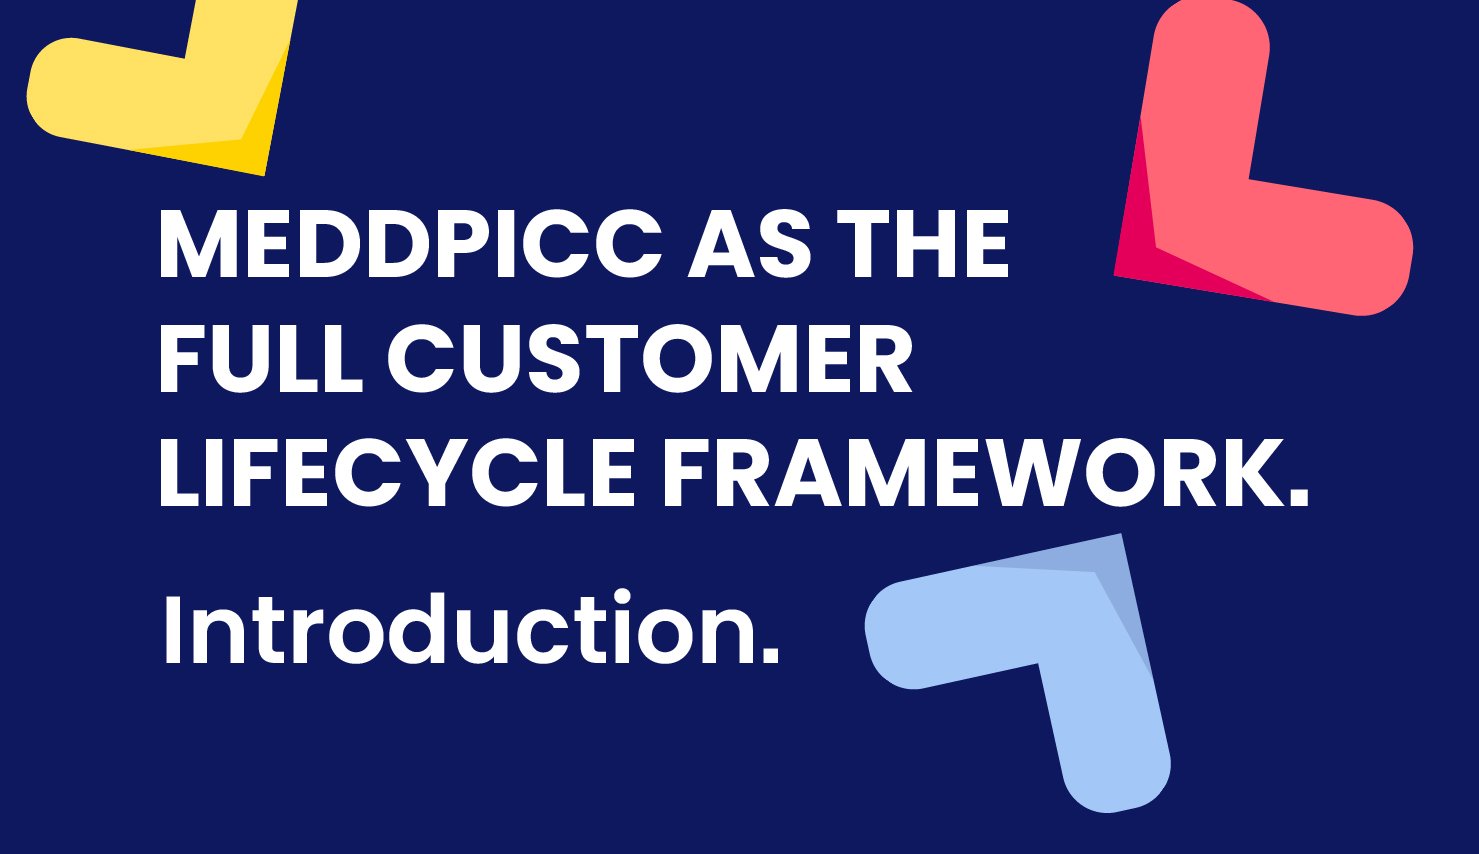 Customer Lifecycle Framework Introduction - Meddicc